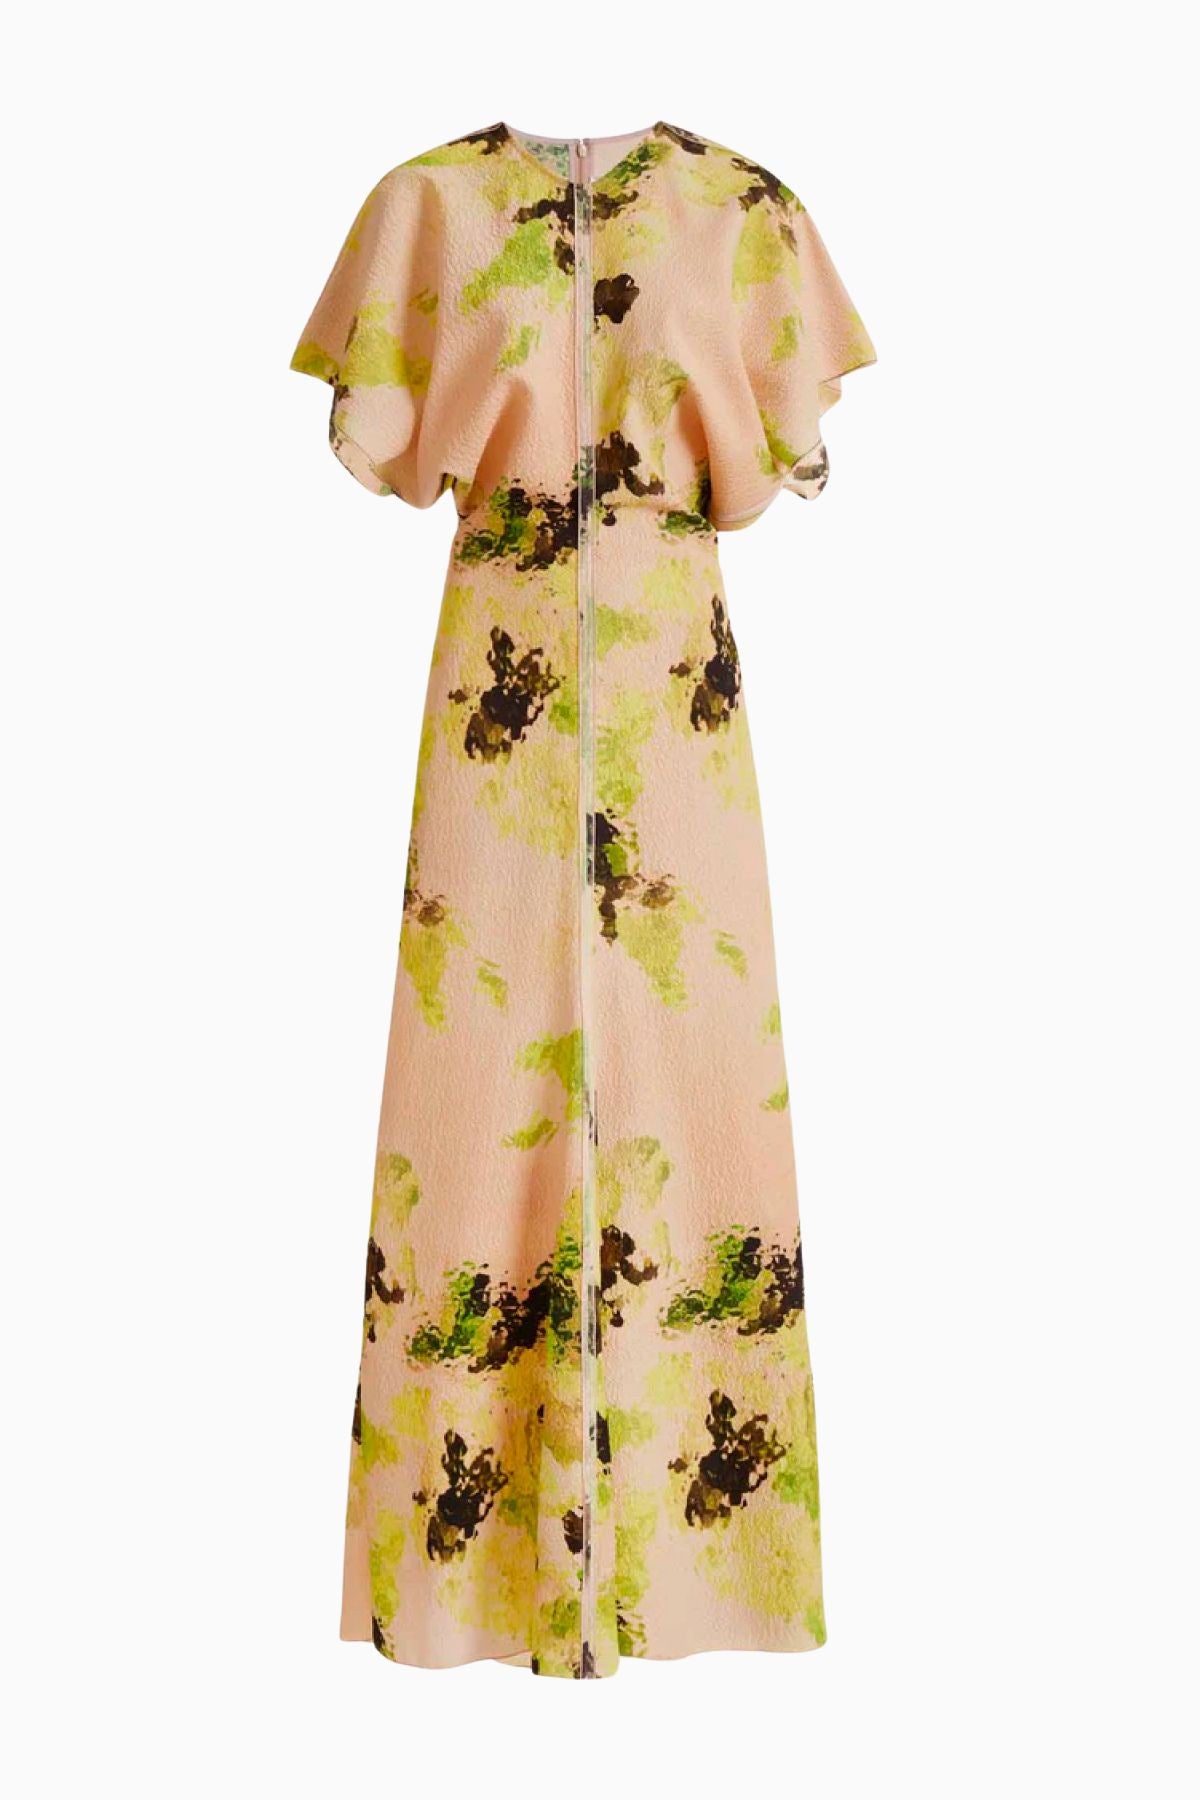 Victoria Beckham Drape Shoulder Printed Dress - Peach/ Lime